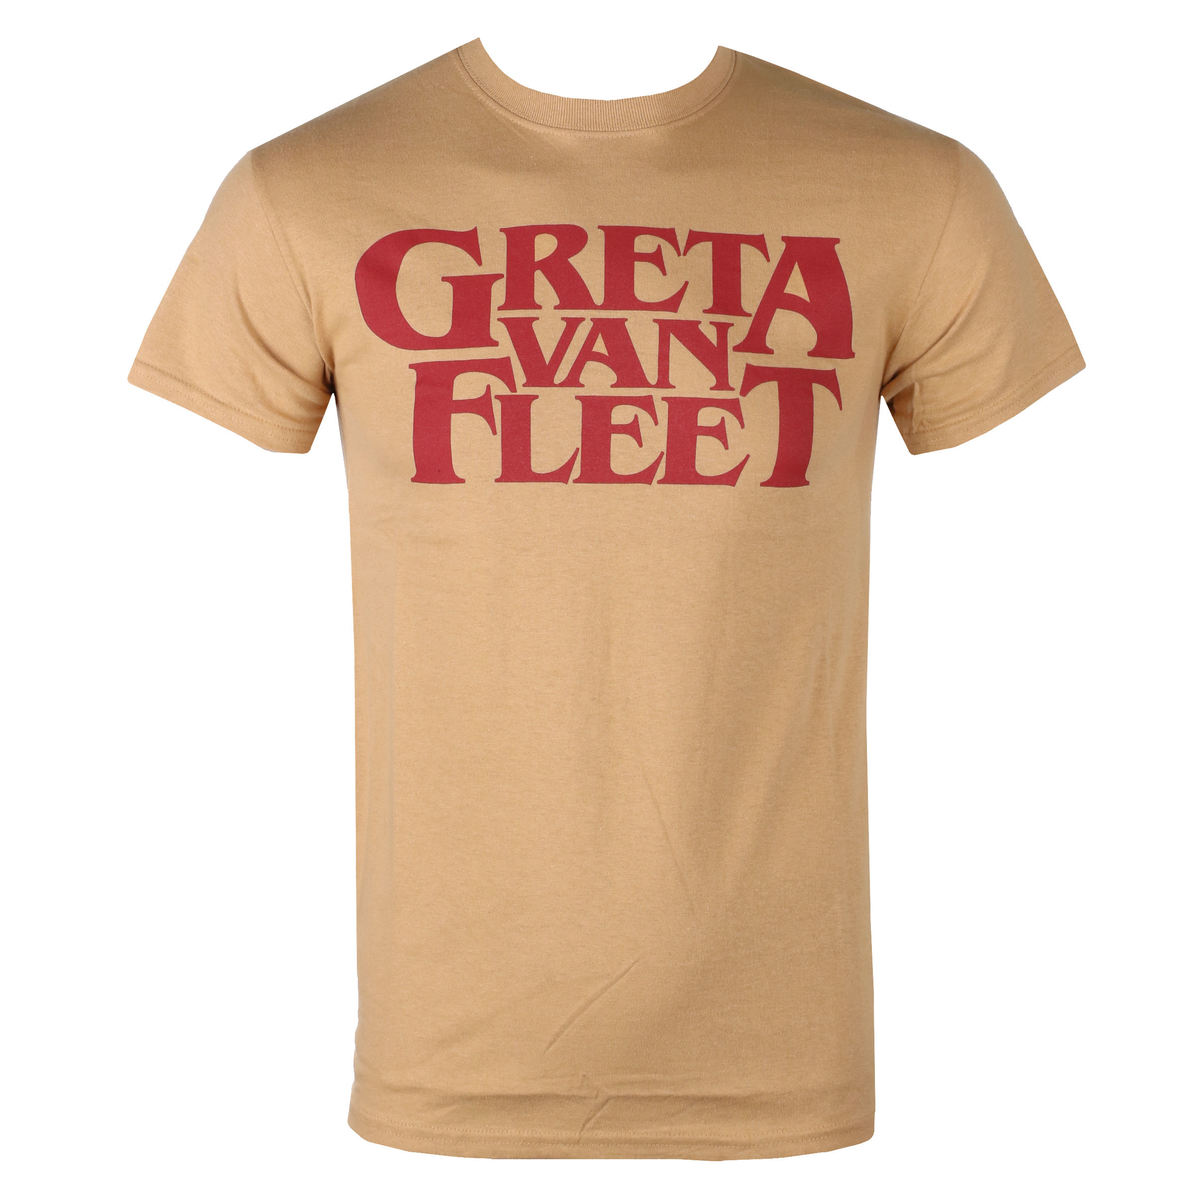 Greta Van Fleet - Old Gold (XL)